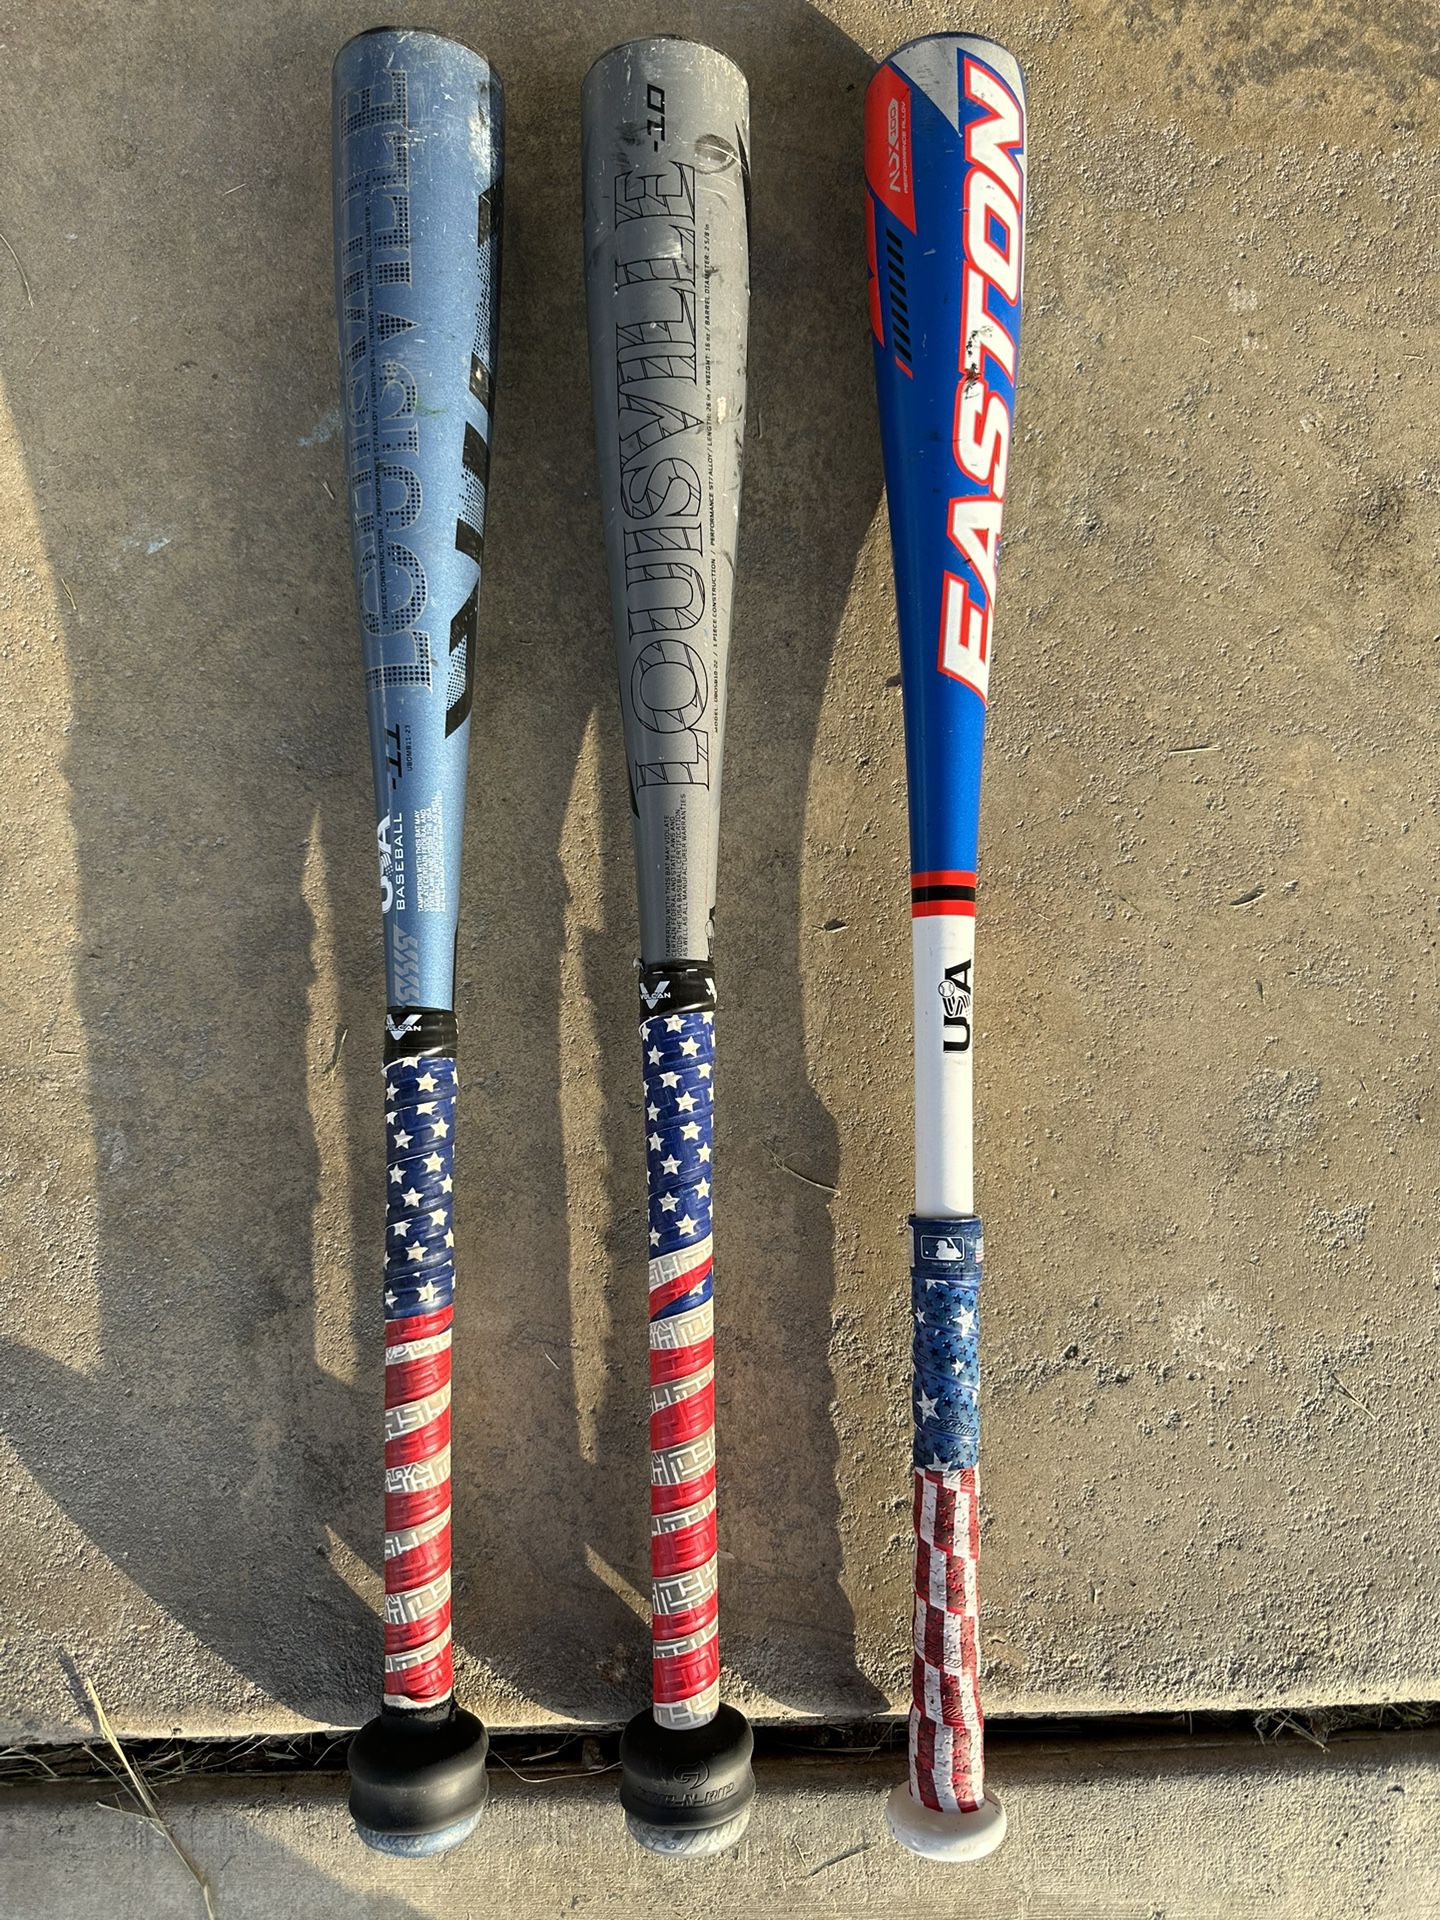 USA Approved Baseball Bat $70 each